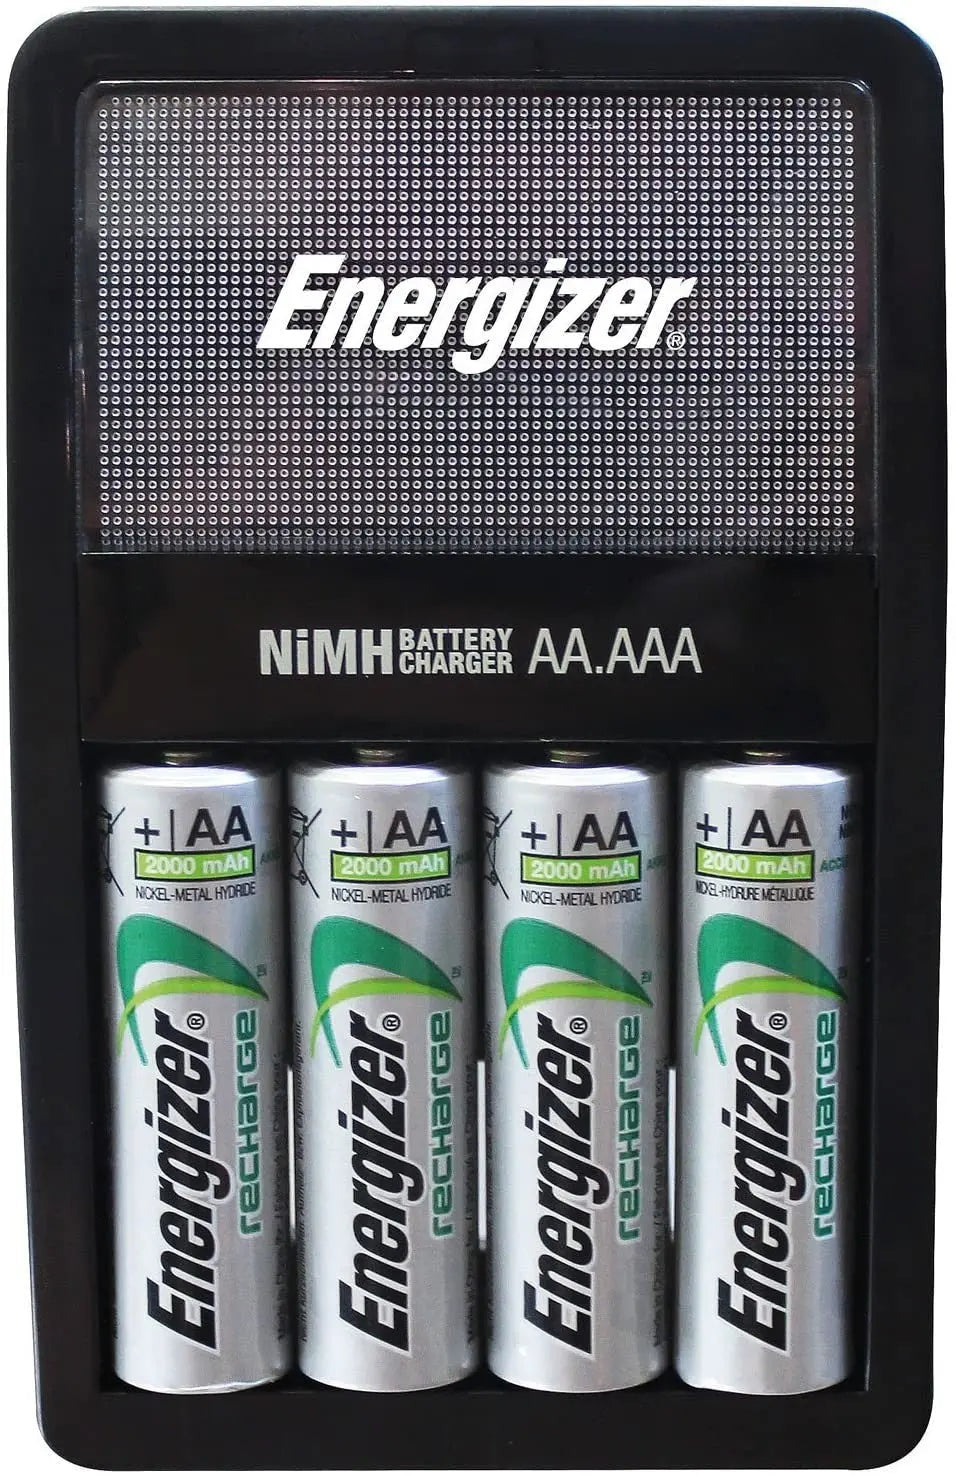 Chargeur de Piles AA / AAA avec 4 Piles AA Rechargeables